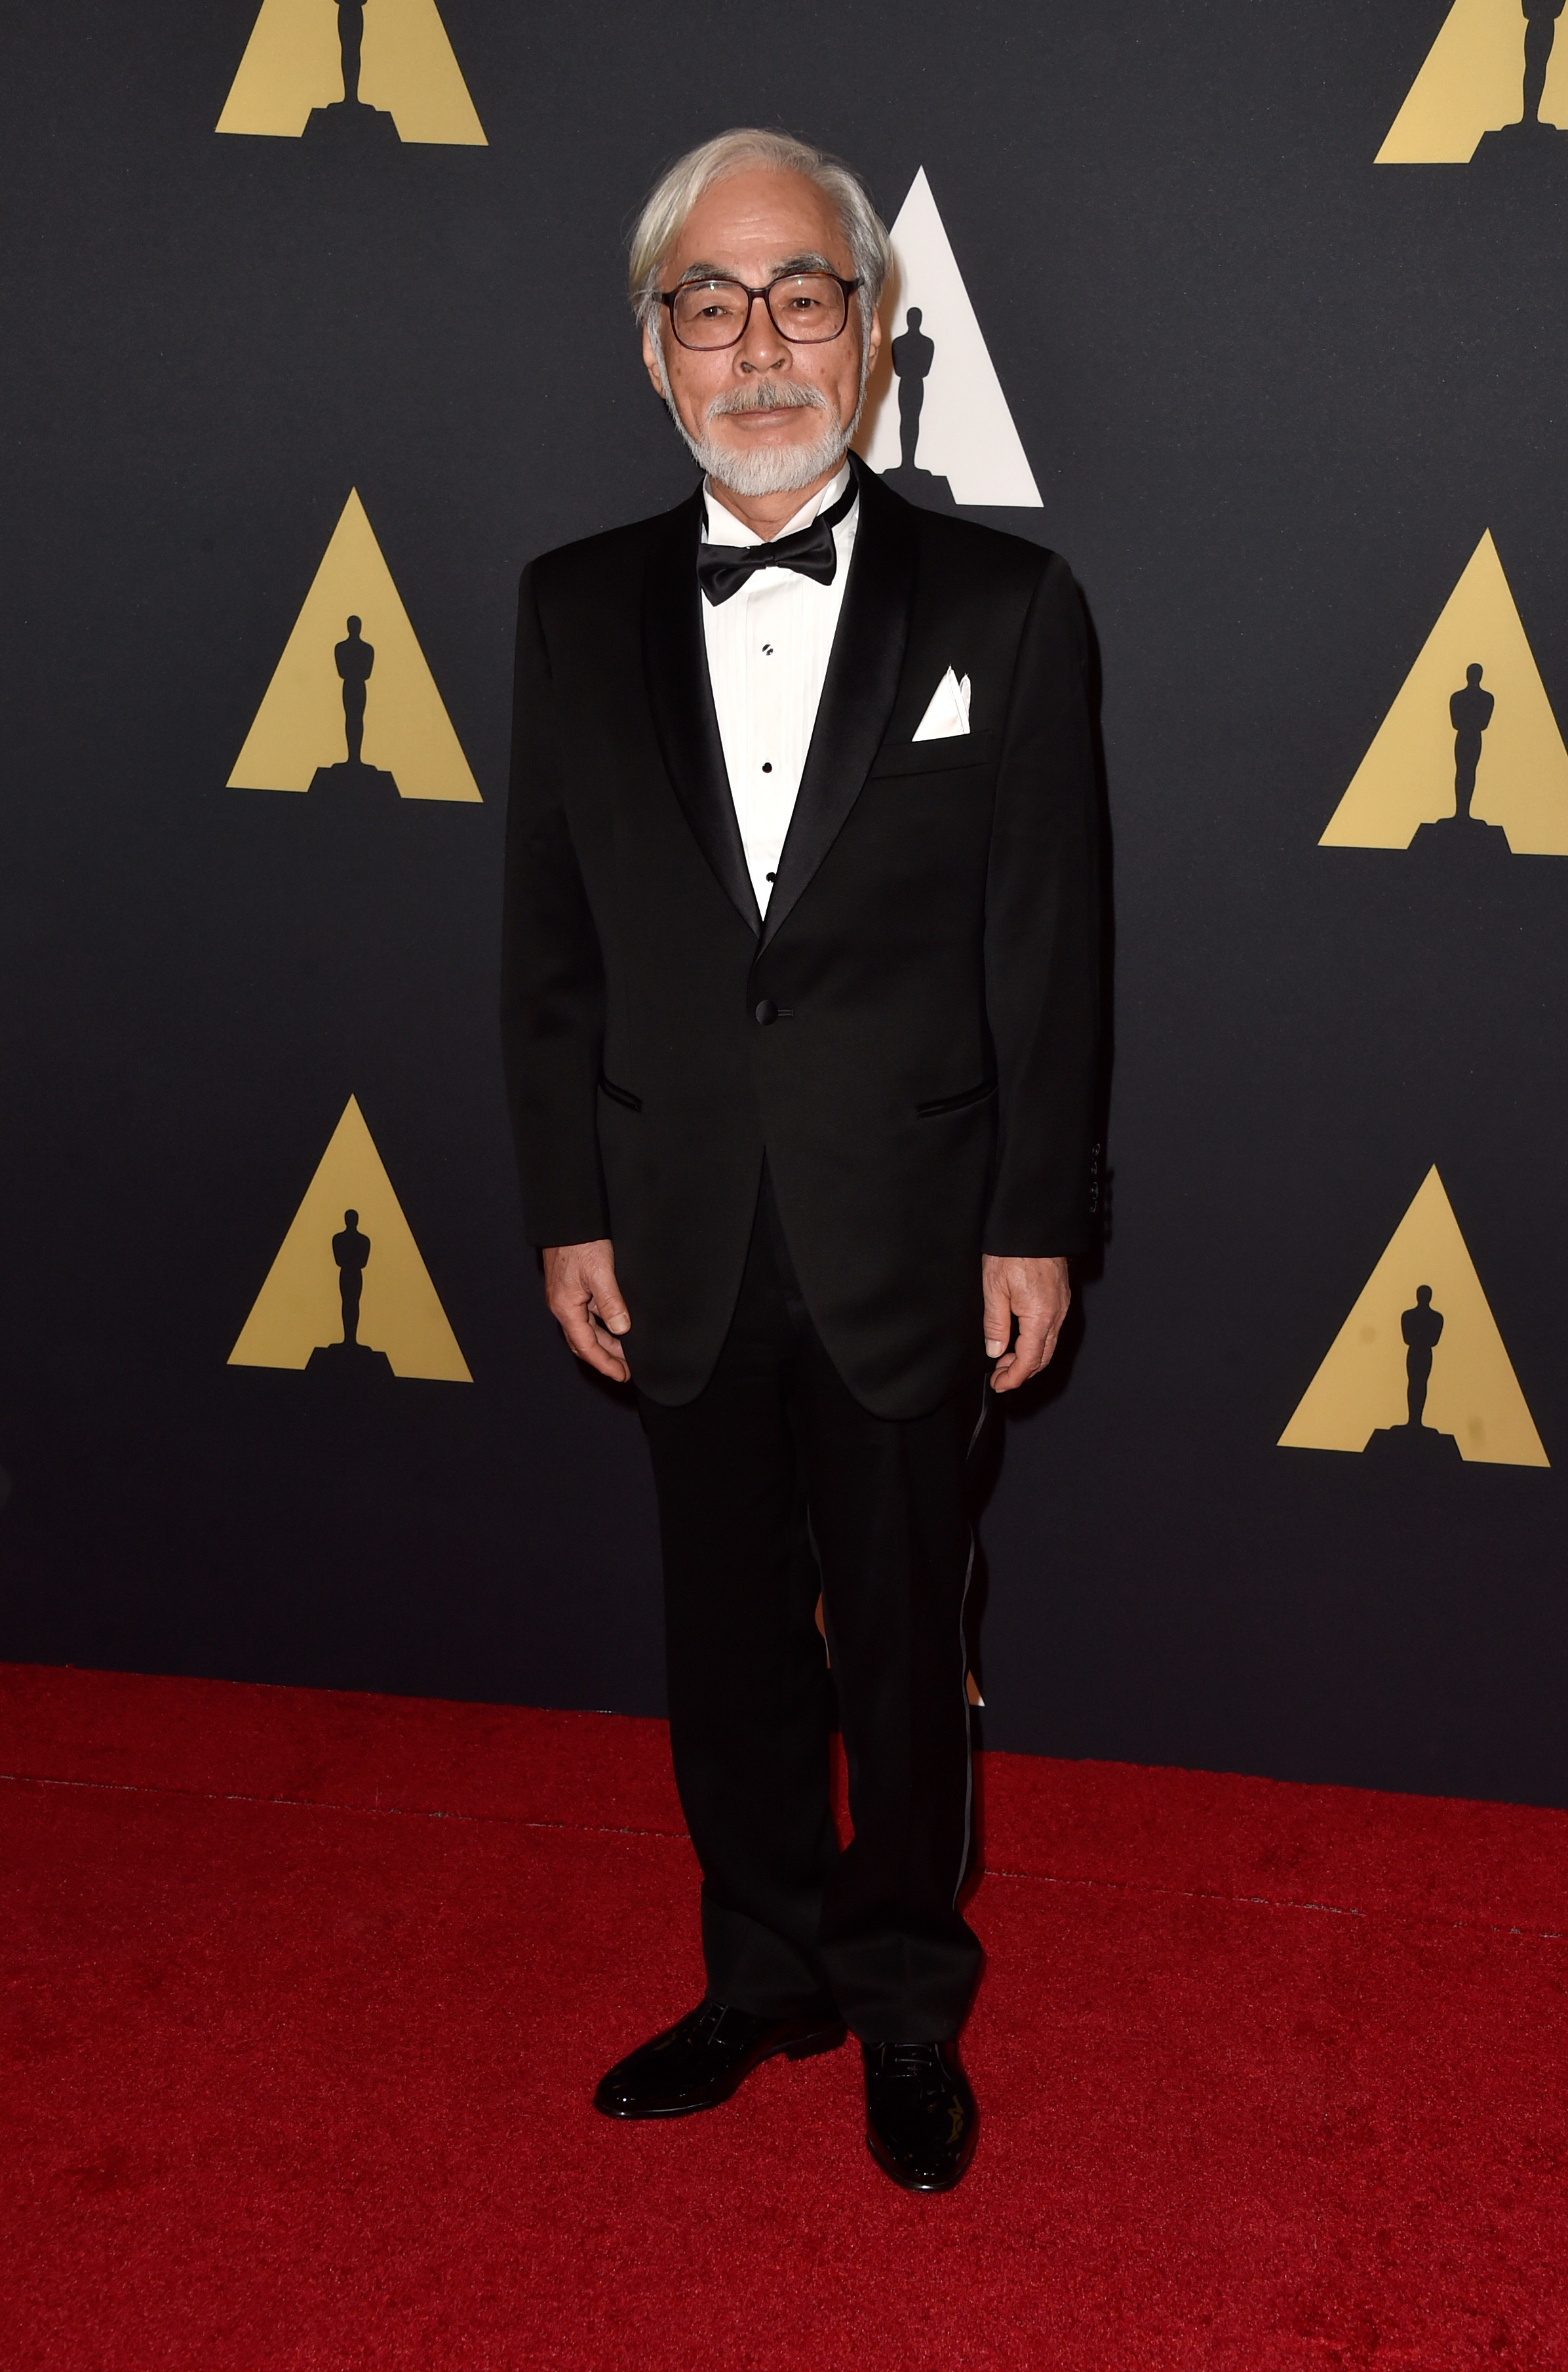 miyazaki on the red carpet wearing a suit